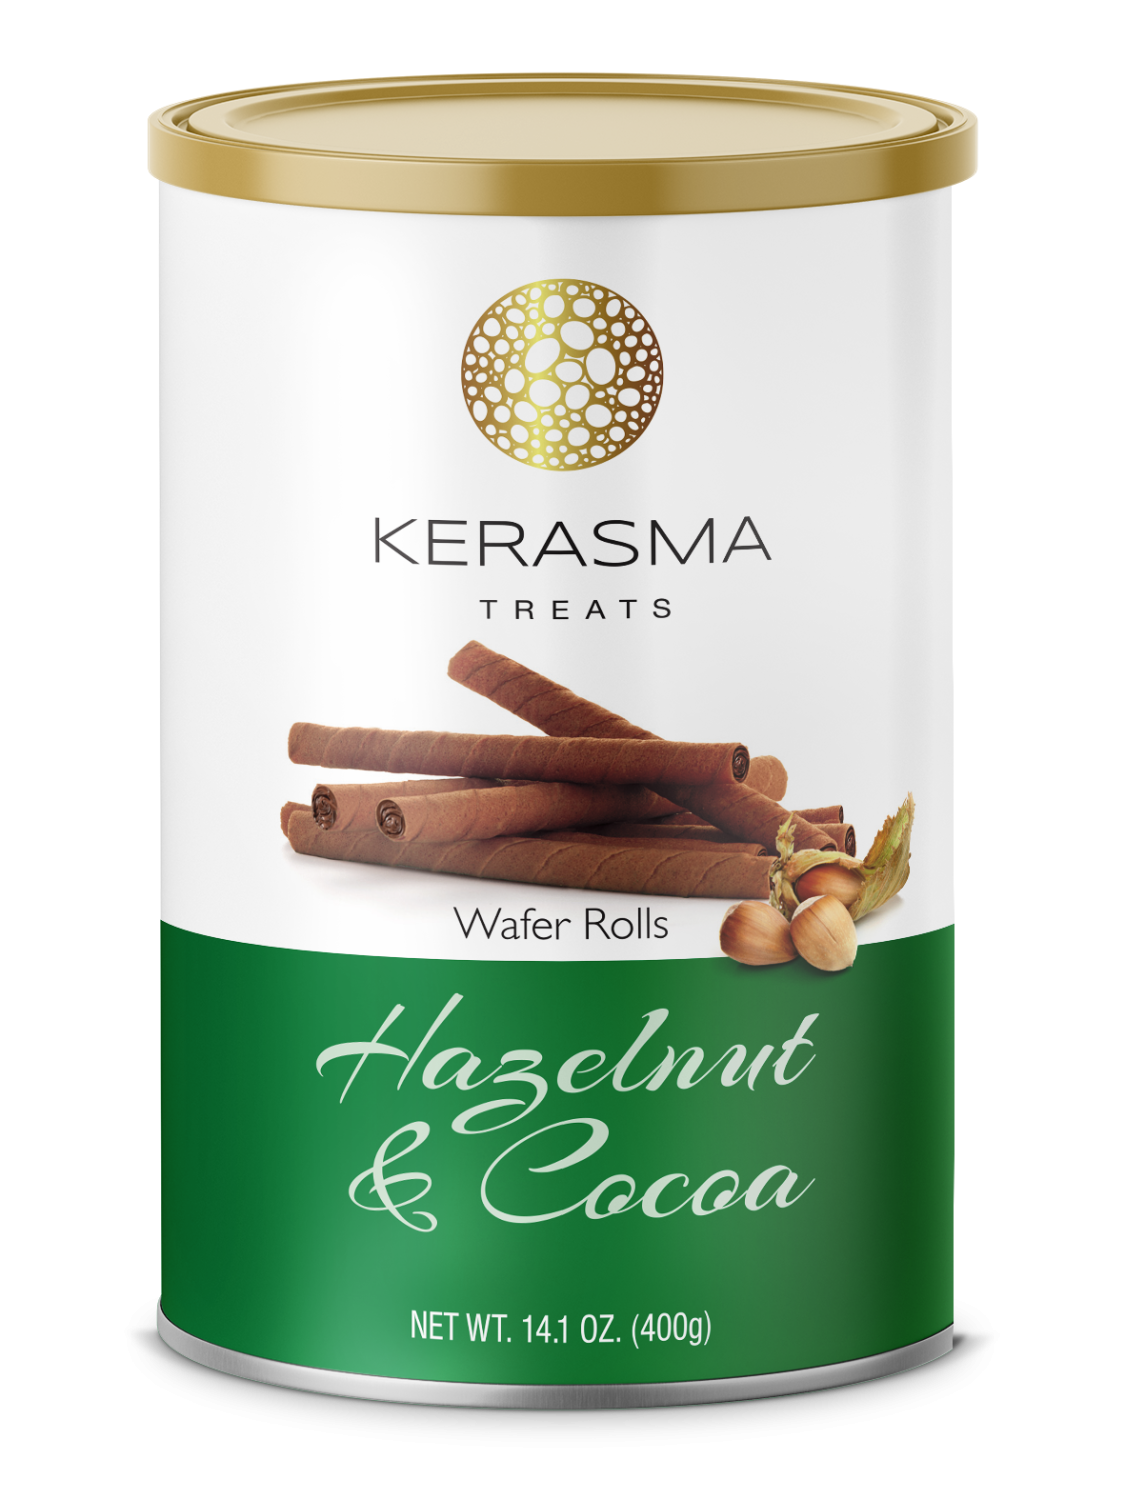 Kerasma waferrolls choklad (12 x 400g)